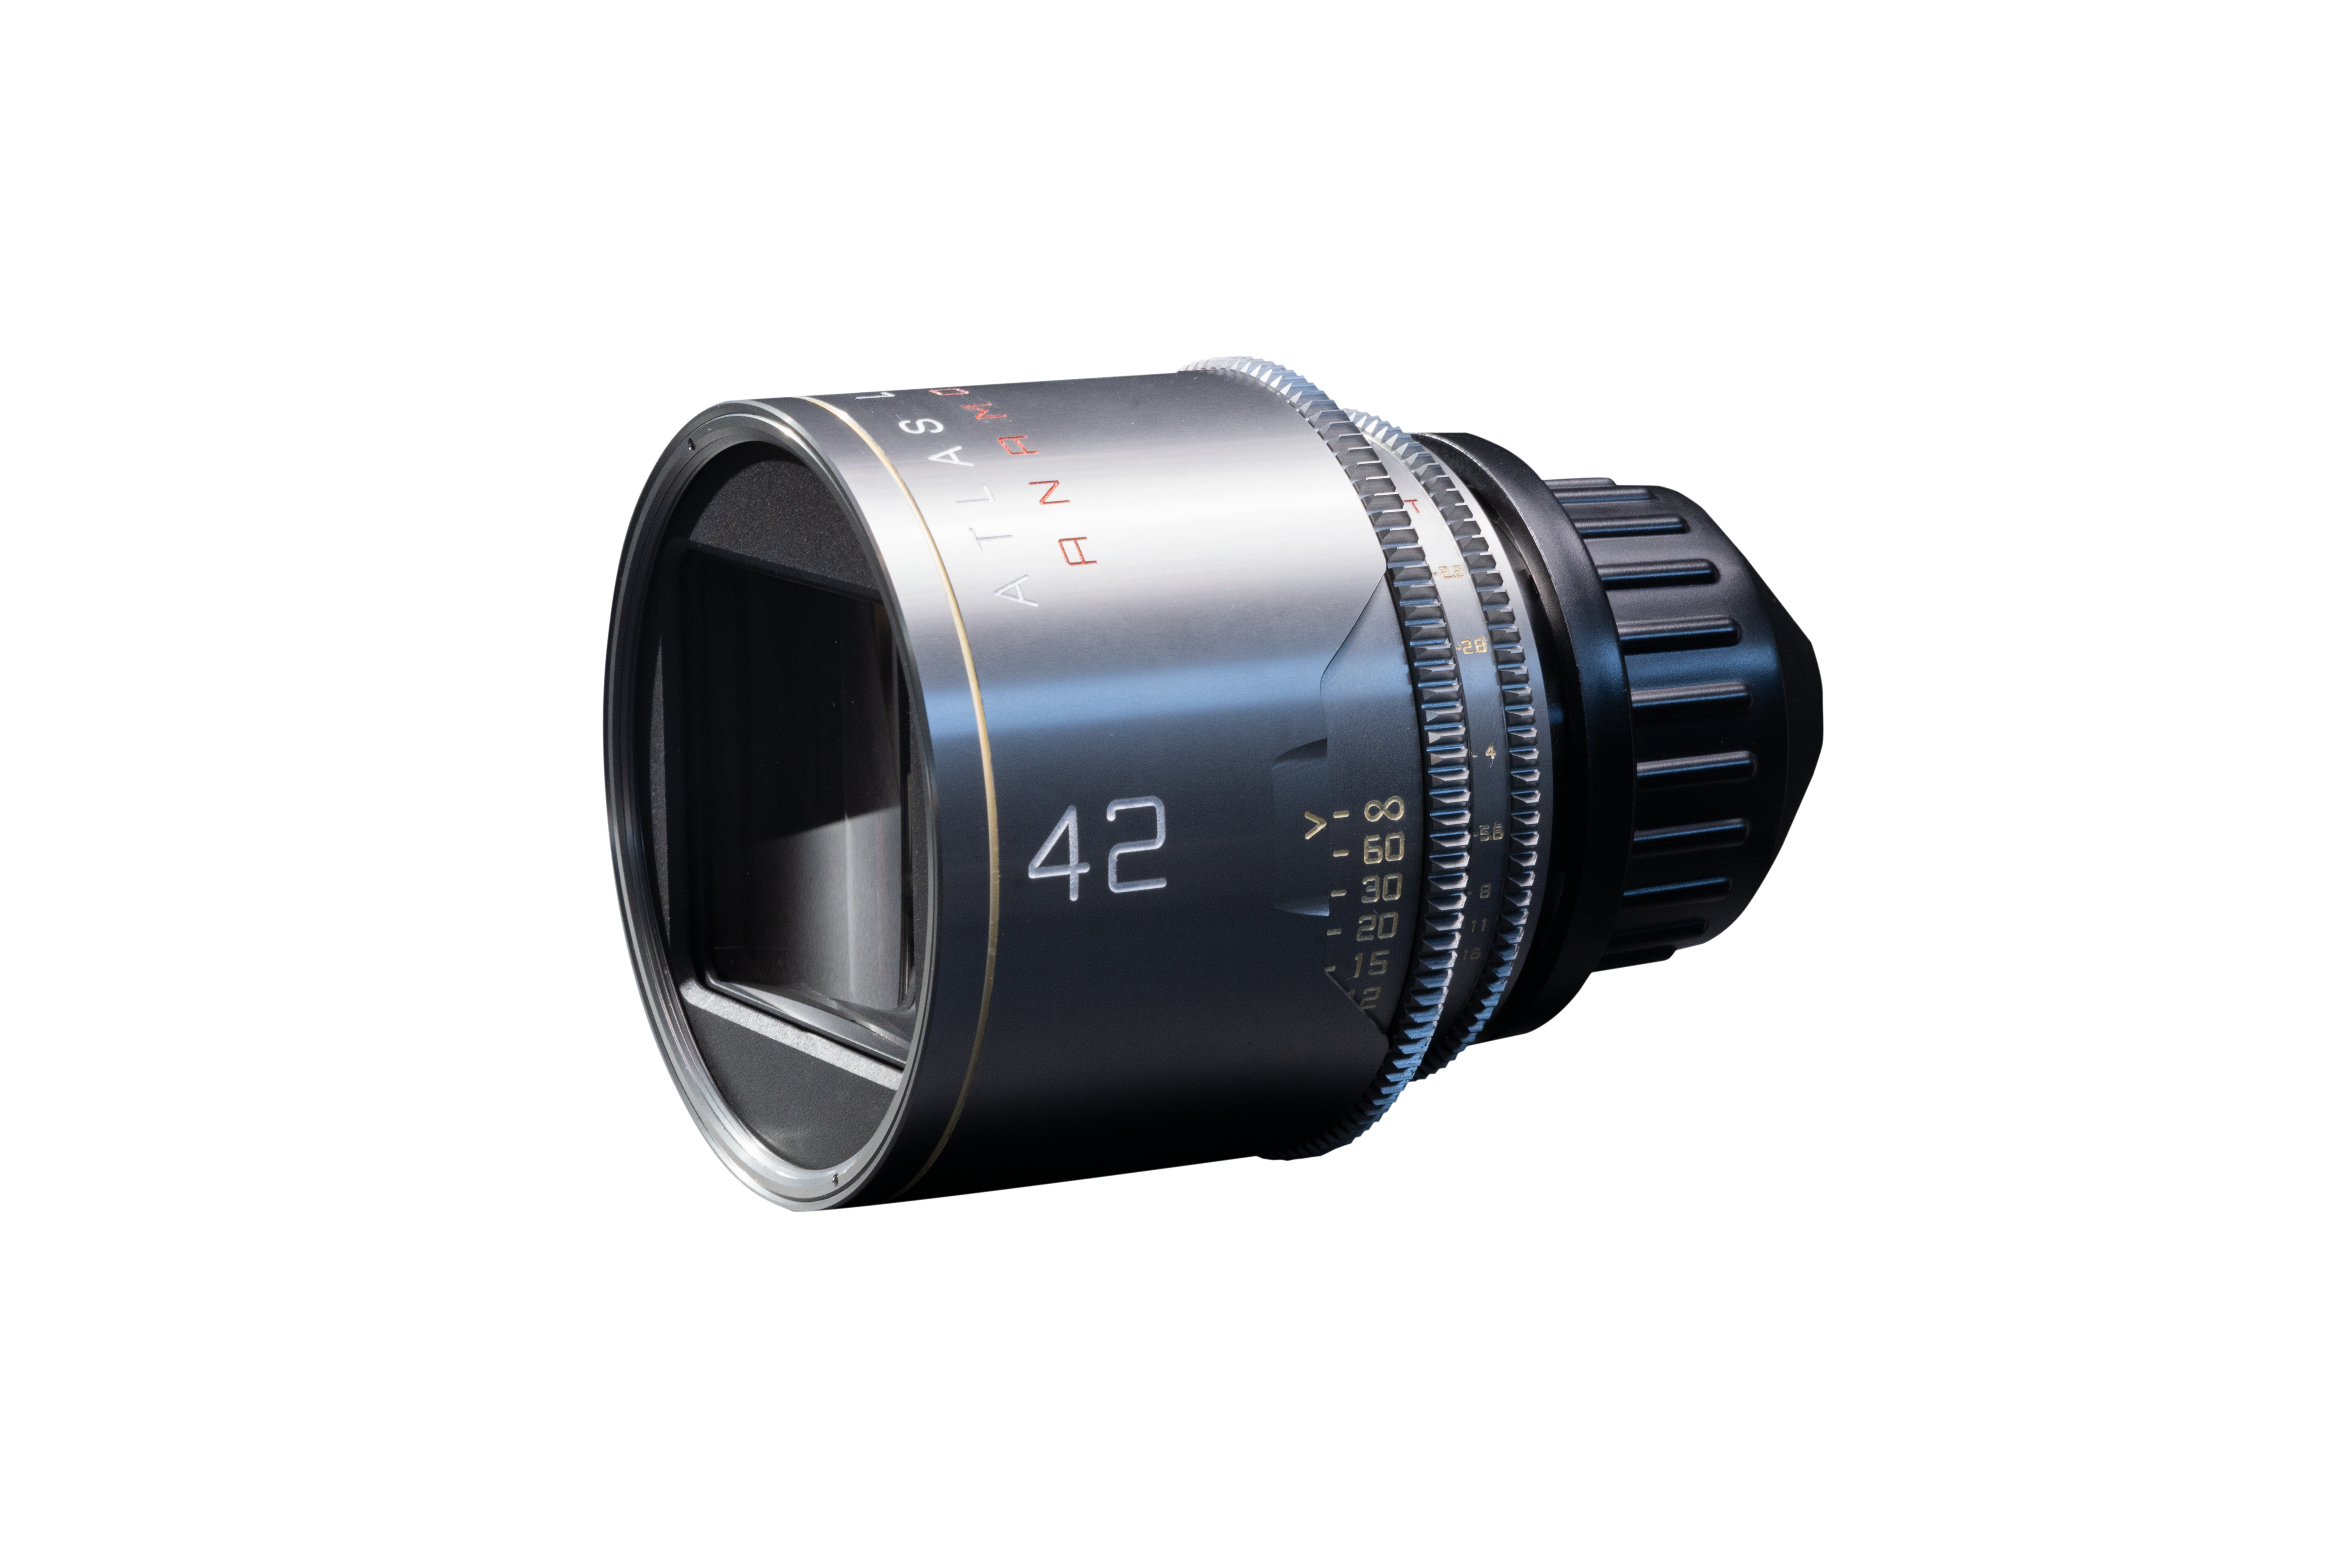 Atlas Lens Co. Launches New "Mercury" Line of 1.5x Anamorphic Lenses 18